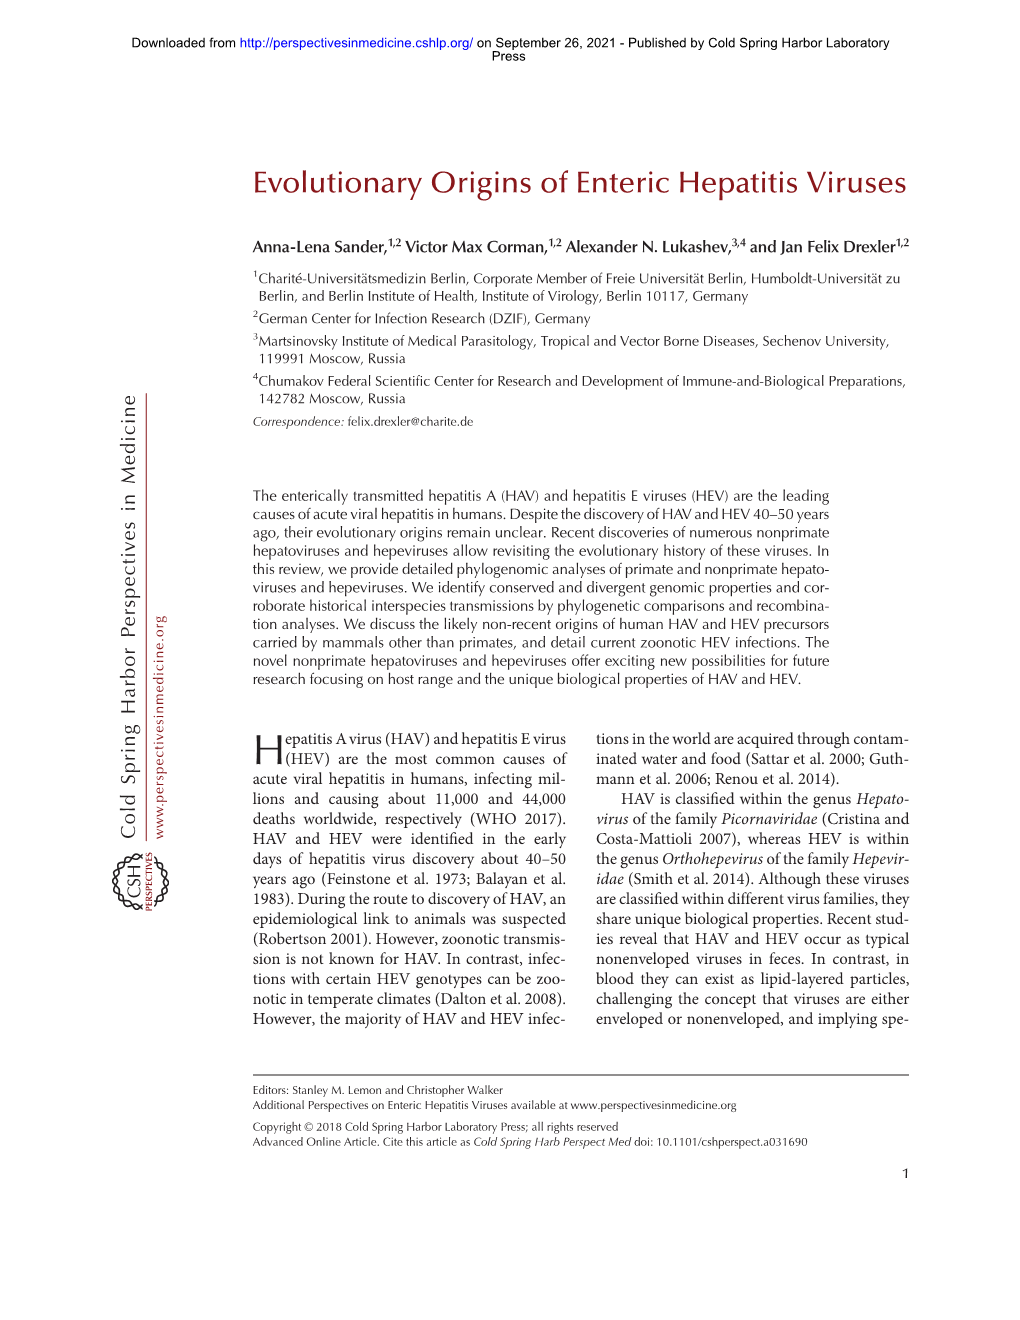 Evolutionary Origins of Enteric Hepatitis Viruses